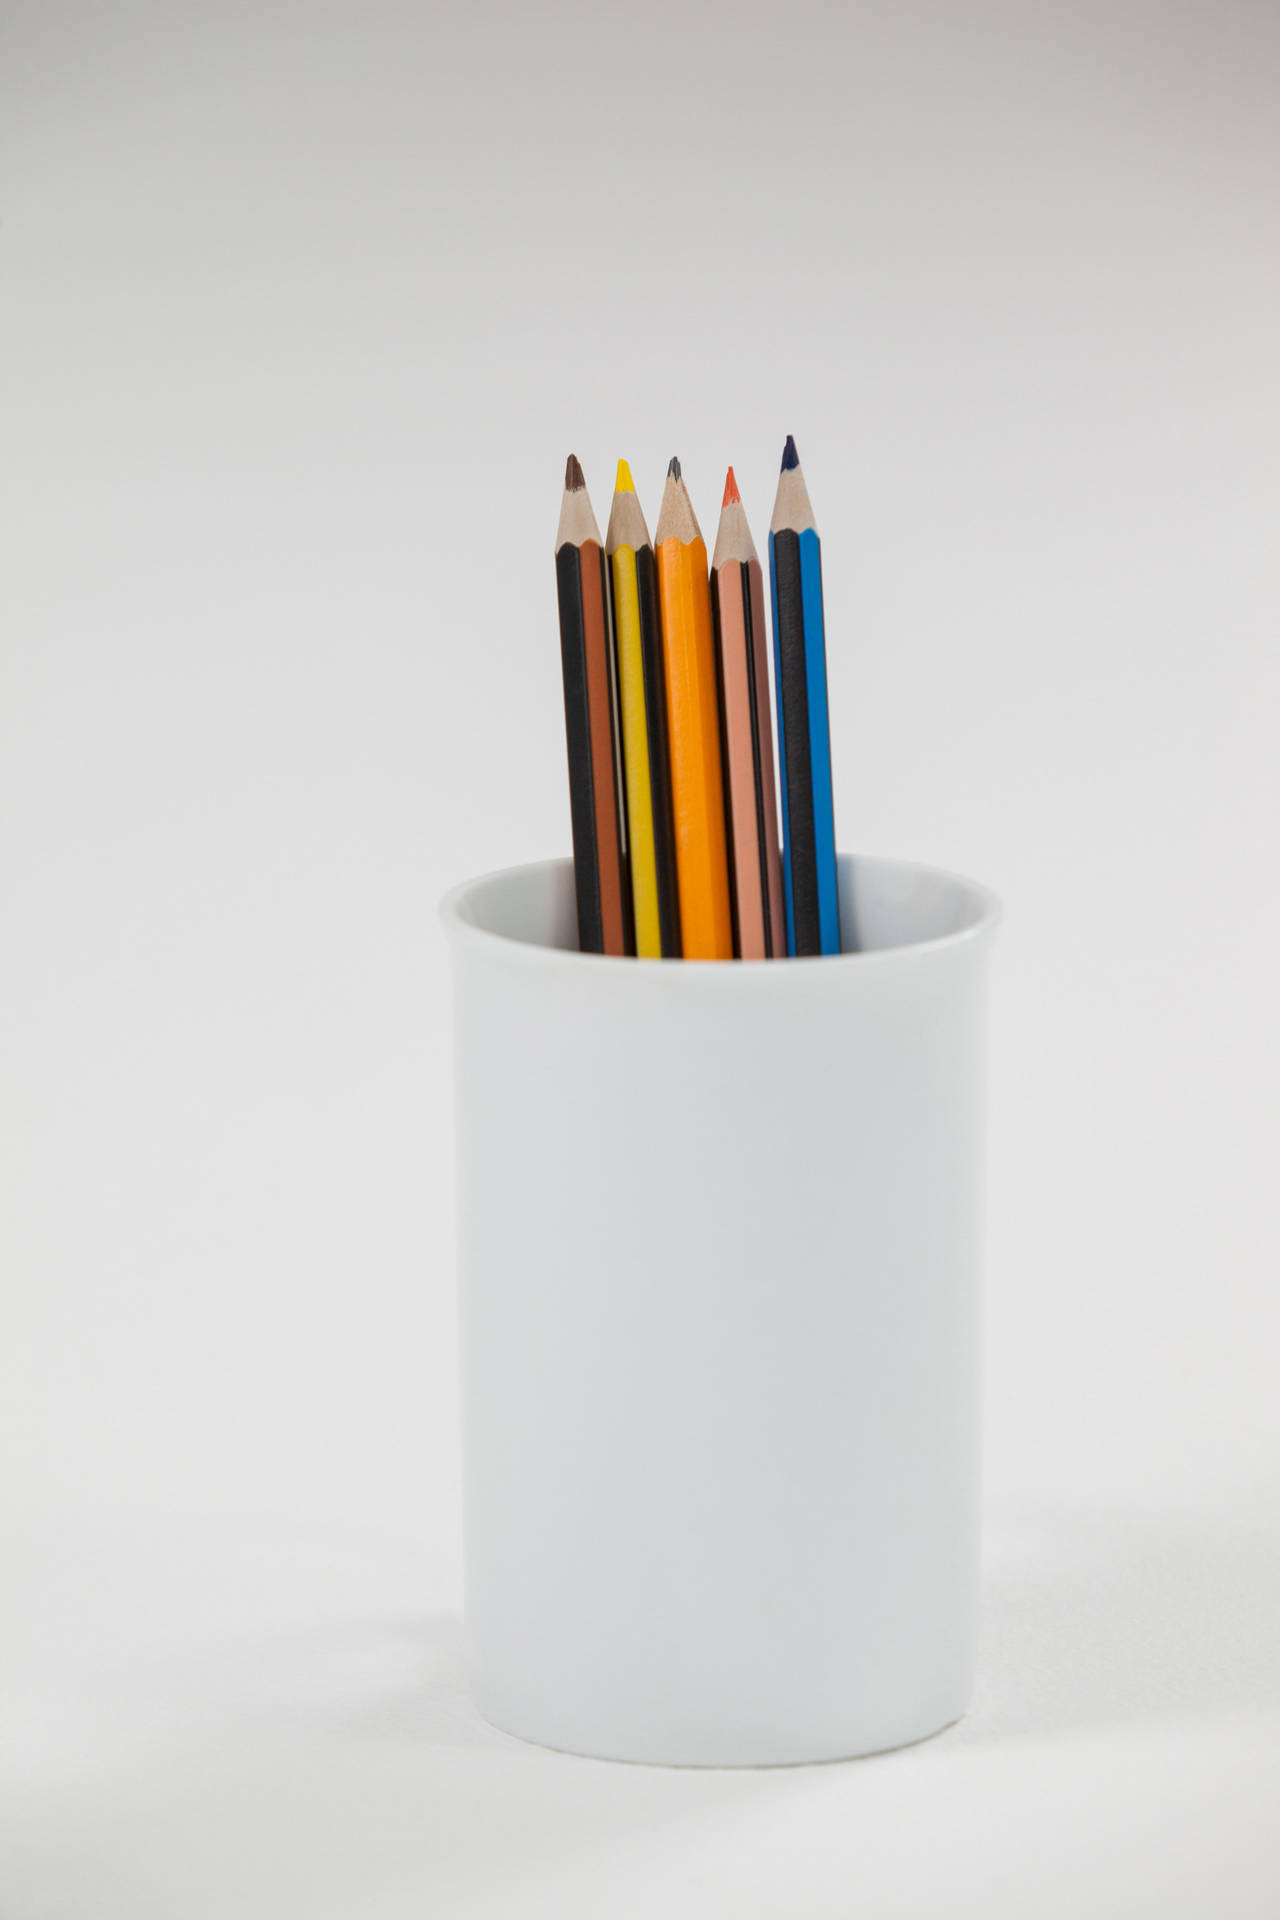 Cup Of Pencils For Art Study Wallpaper